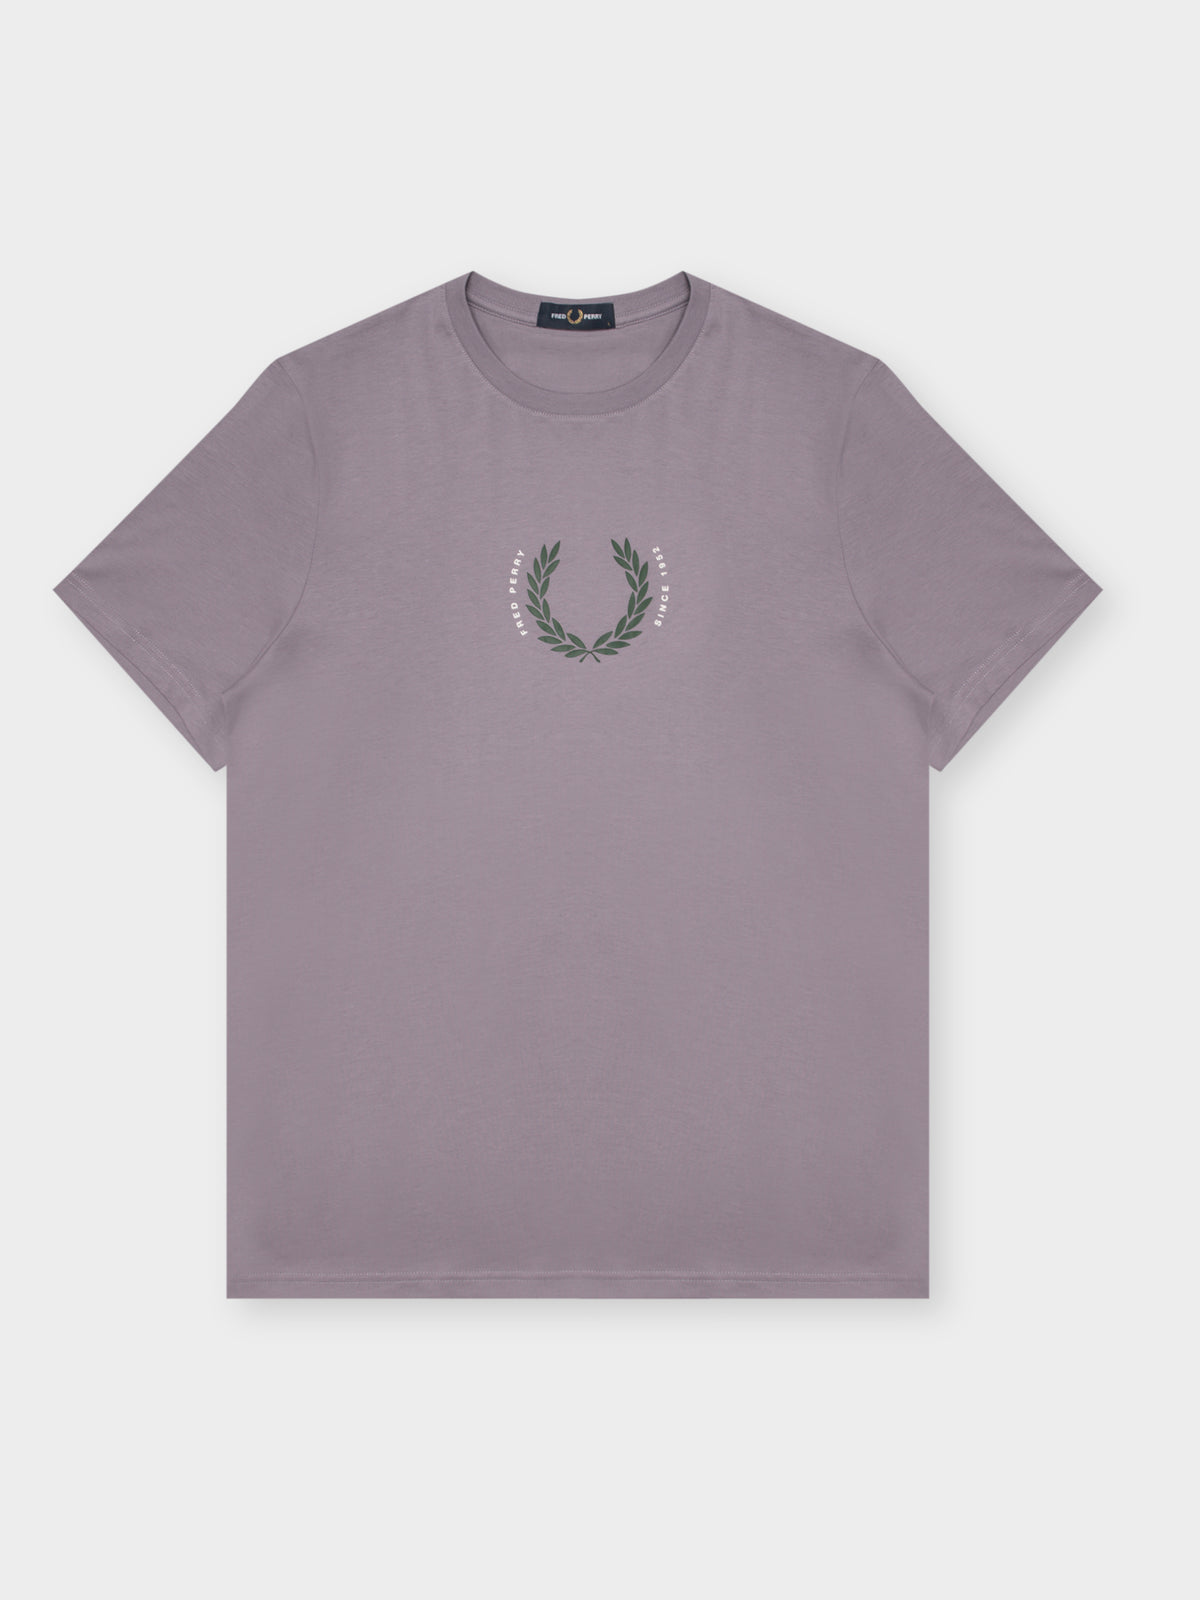 Arch Branding T-Shirt in Lavender